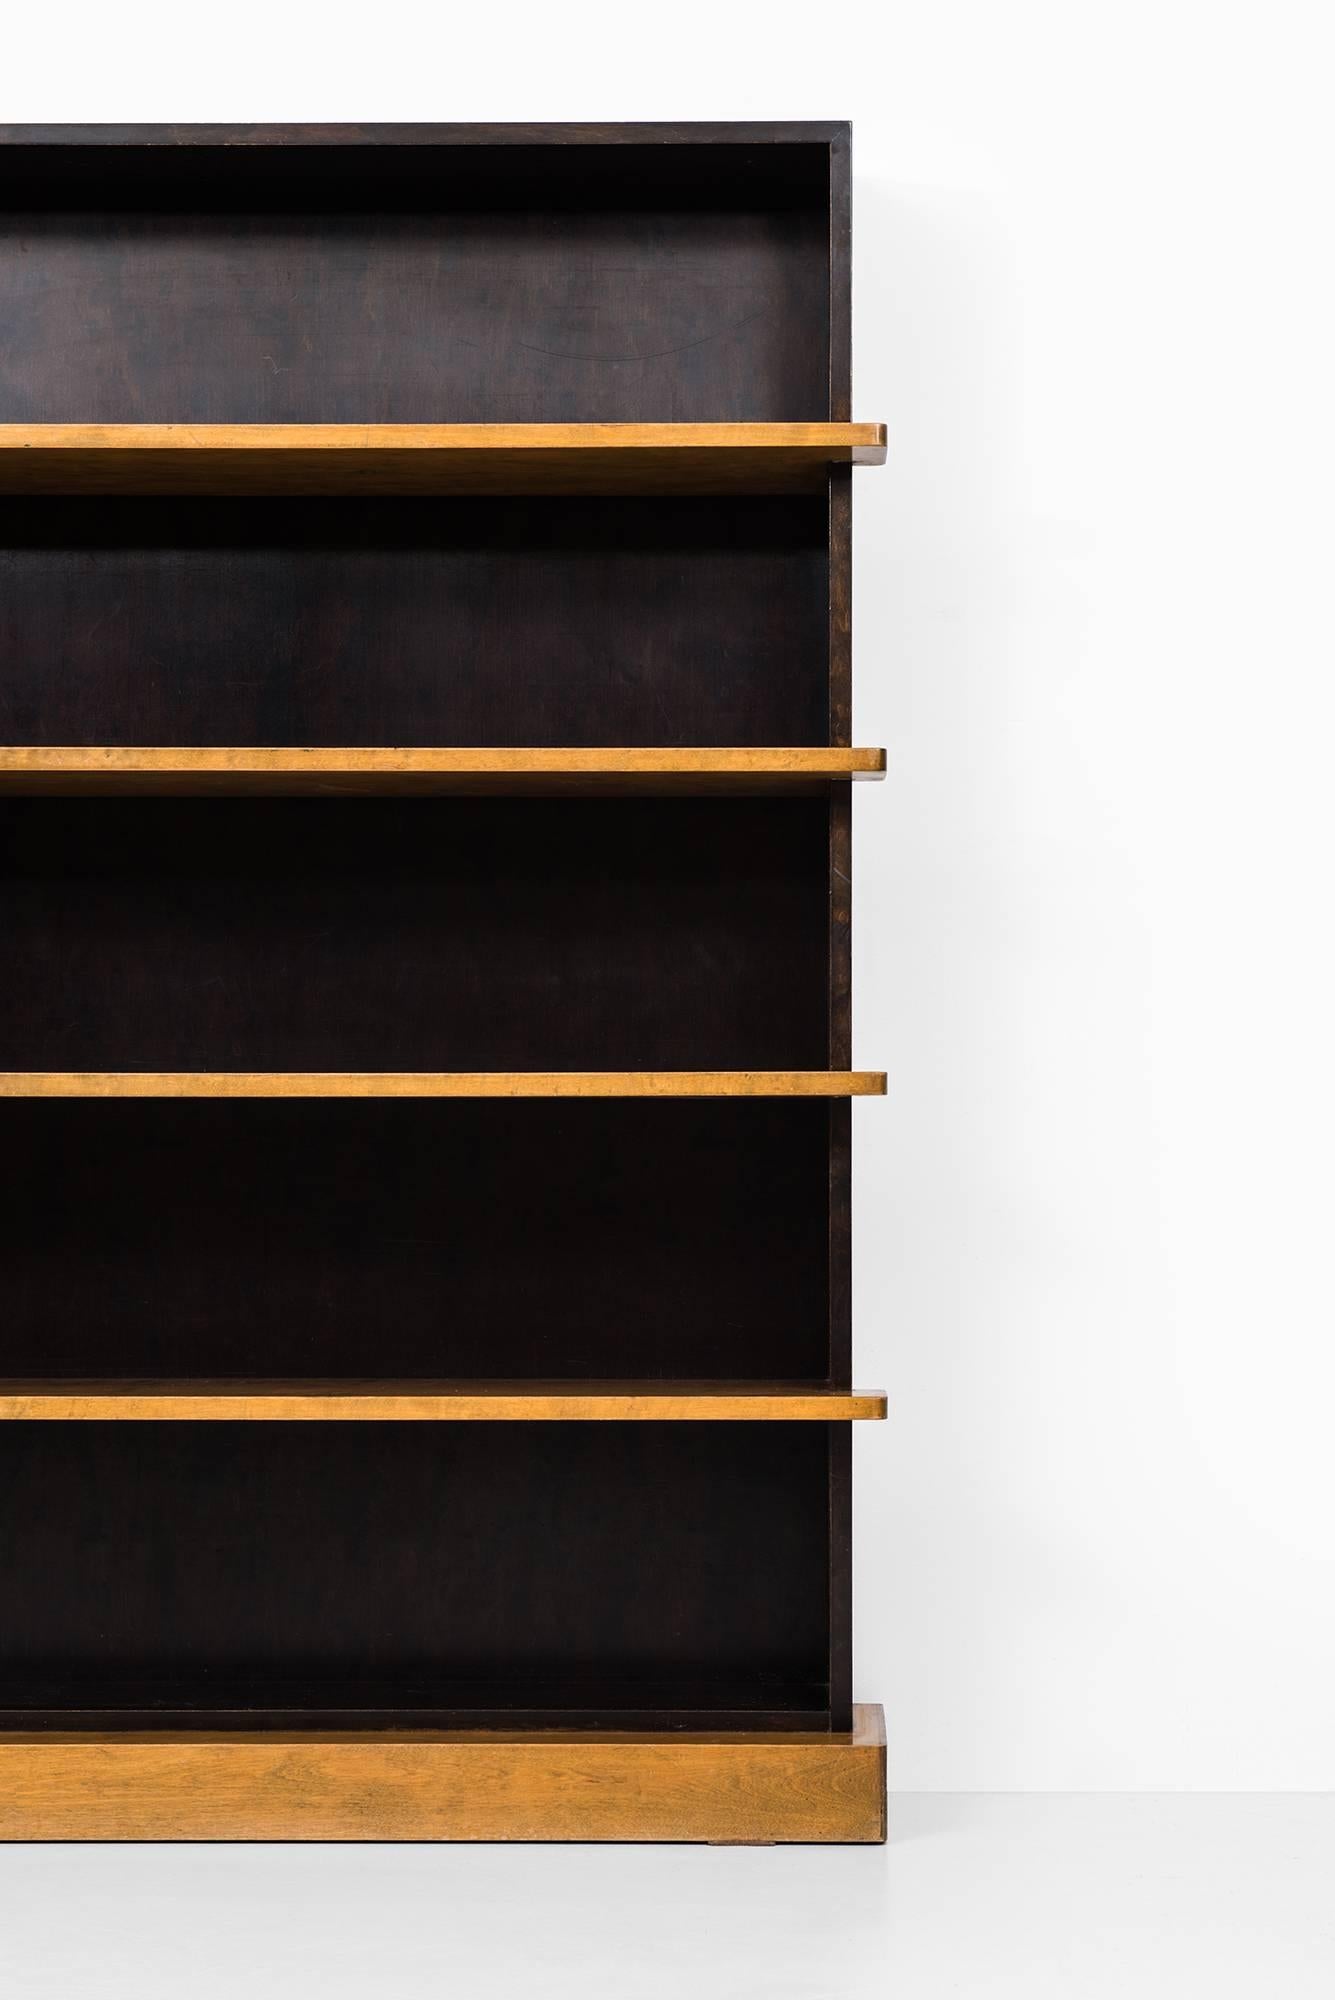 Rare bookcase model Oh boy designed by Axel Einar Hjorth. Produced by Nordiska Kompaniet in Sweden.